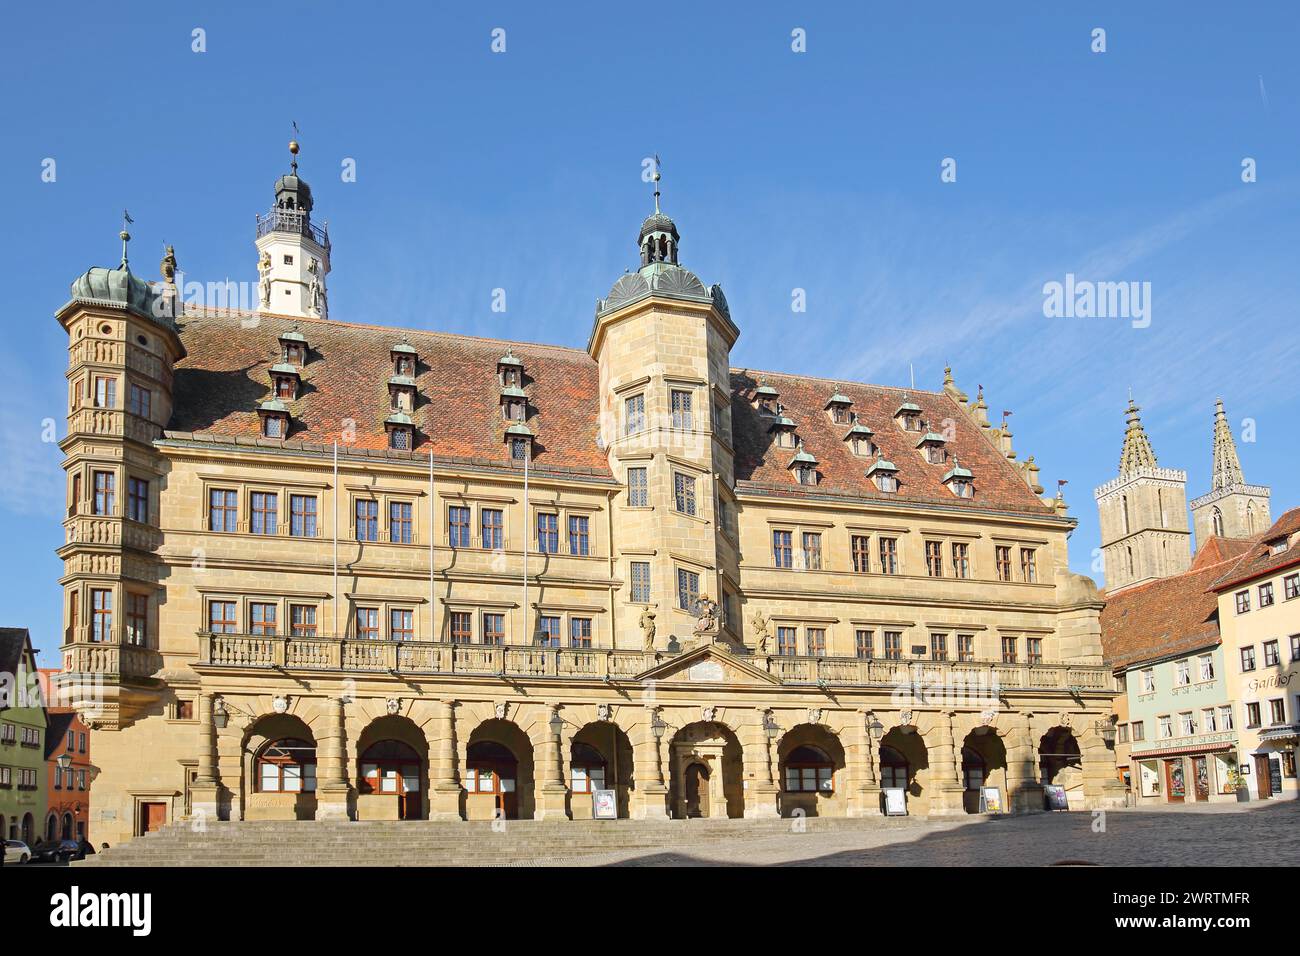 Renaissance town hall and towers of St Jacob's Church, market square, Rothenburg ob der Tauber, Tauberfranken, Franconia, Bavaria, Germany Stock Photo